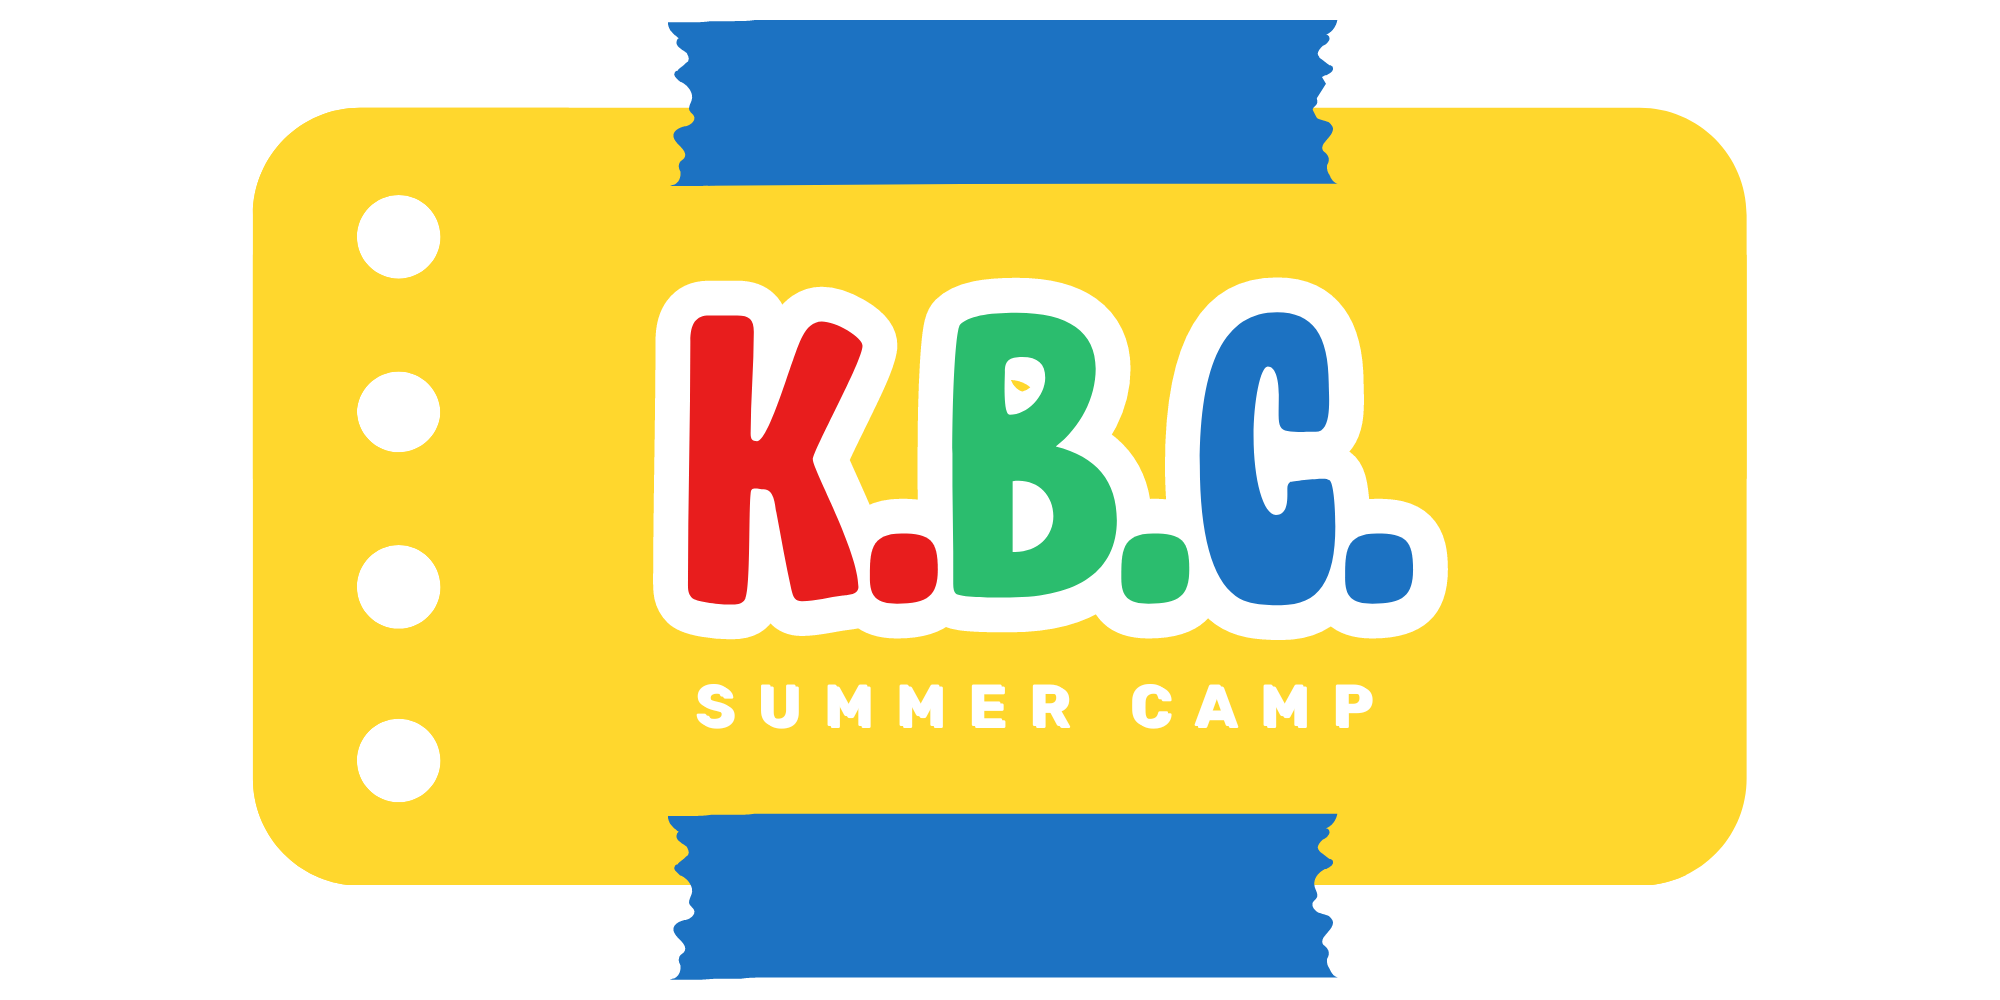 KBC summer camp logo